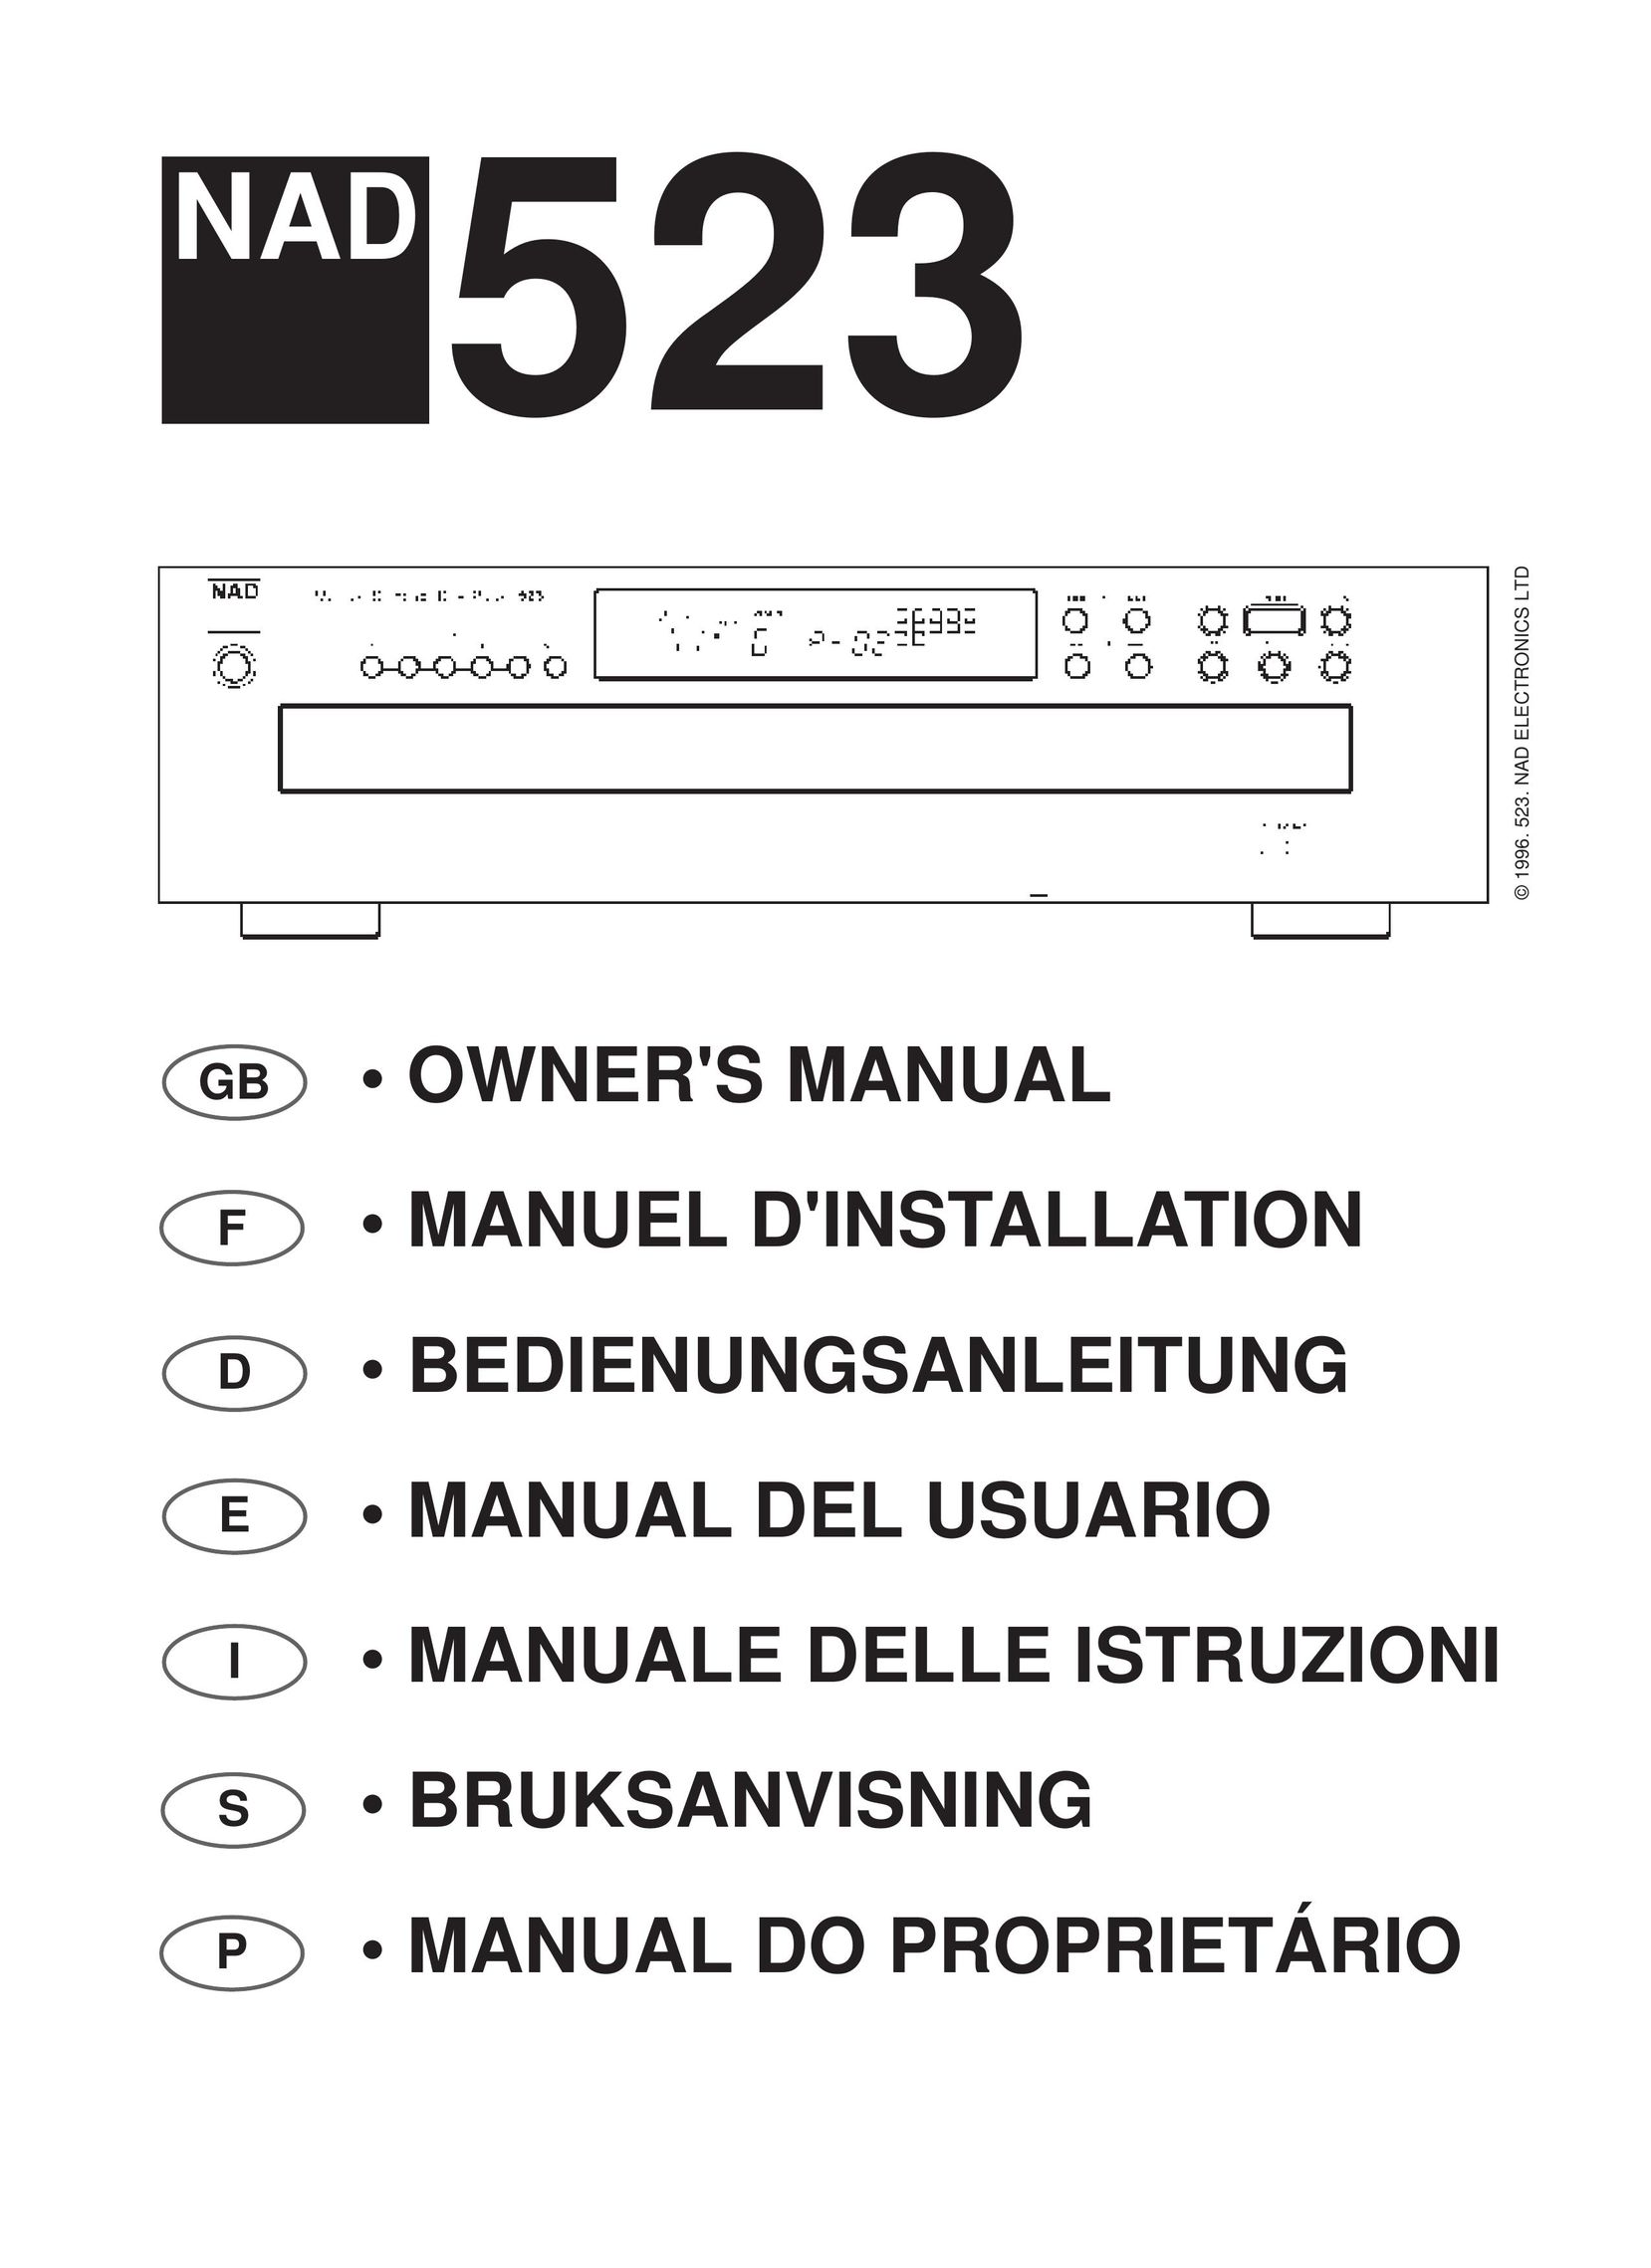 NAD 523 CD Player User Manual